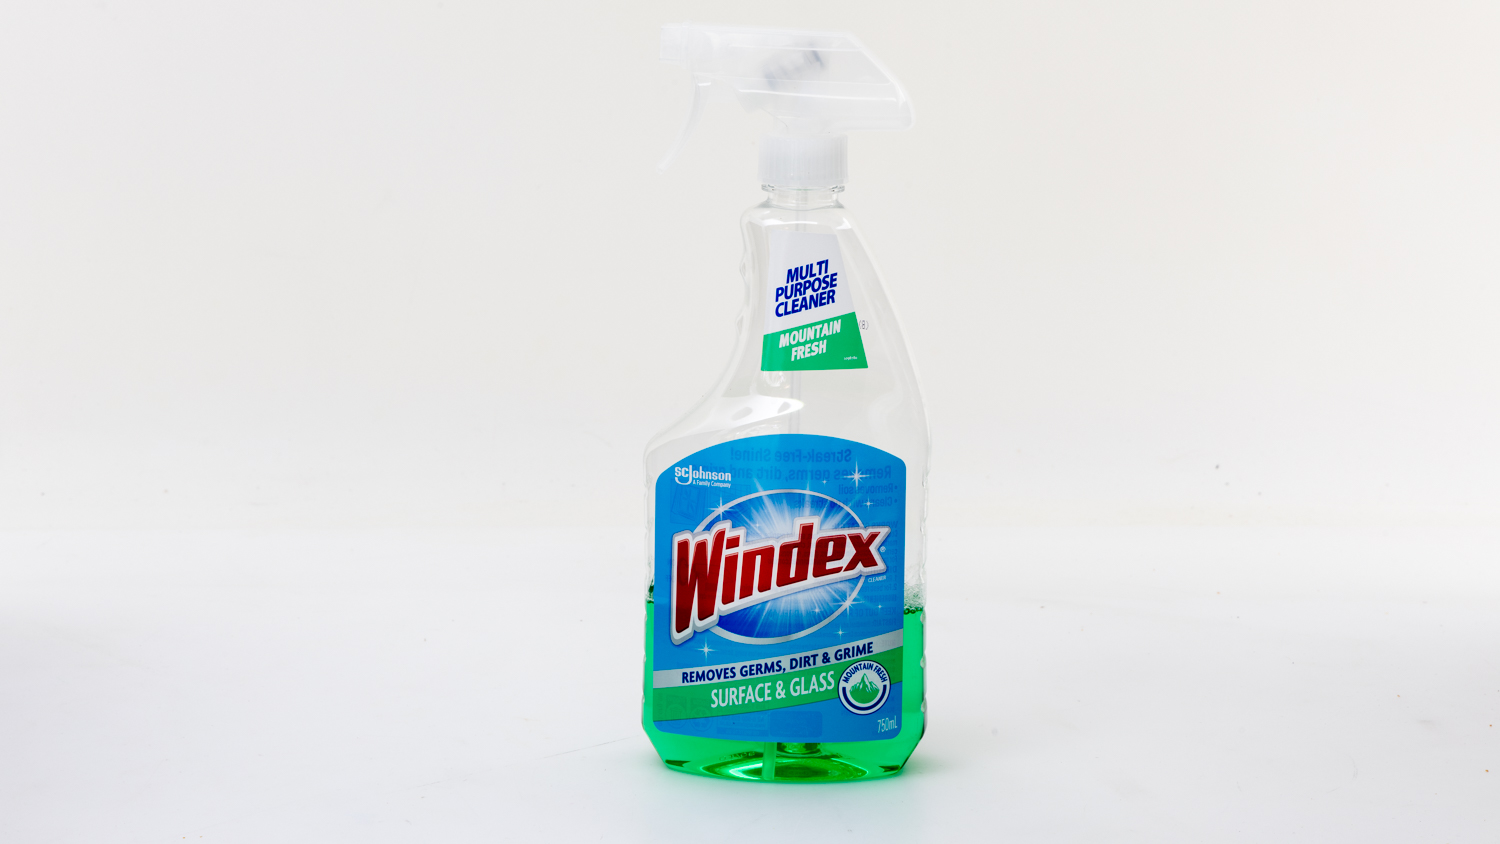 Windex Surface & Glass Multi Purpose Cleaner Mountain Fresh carousel image